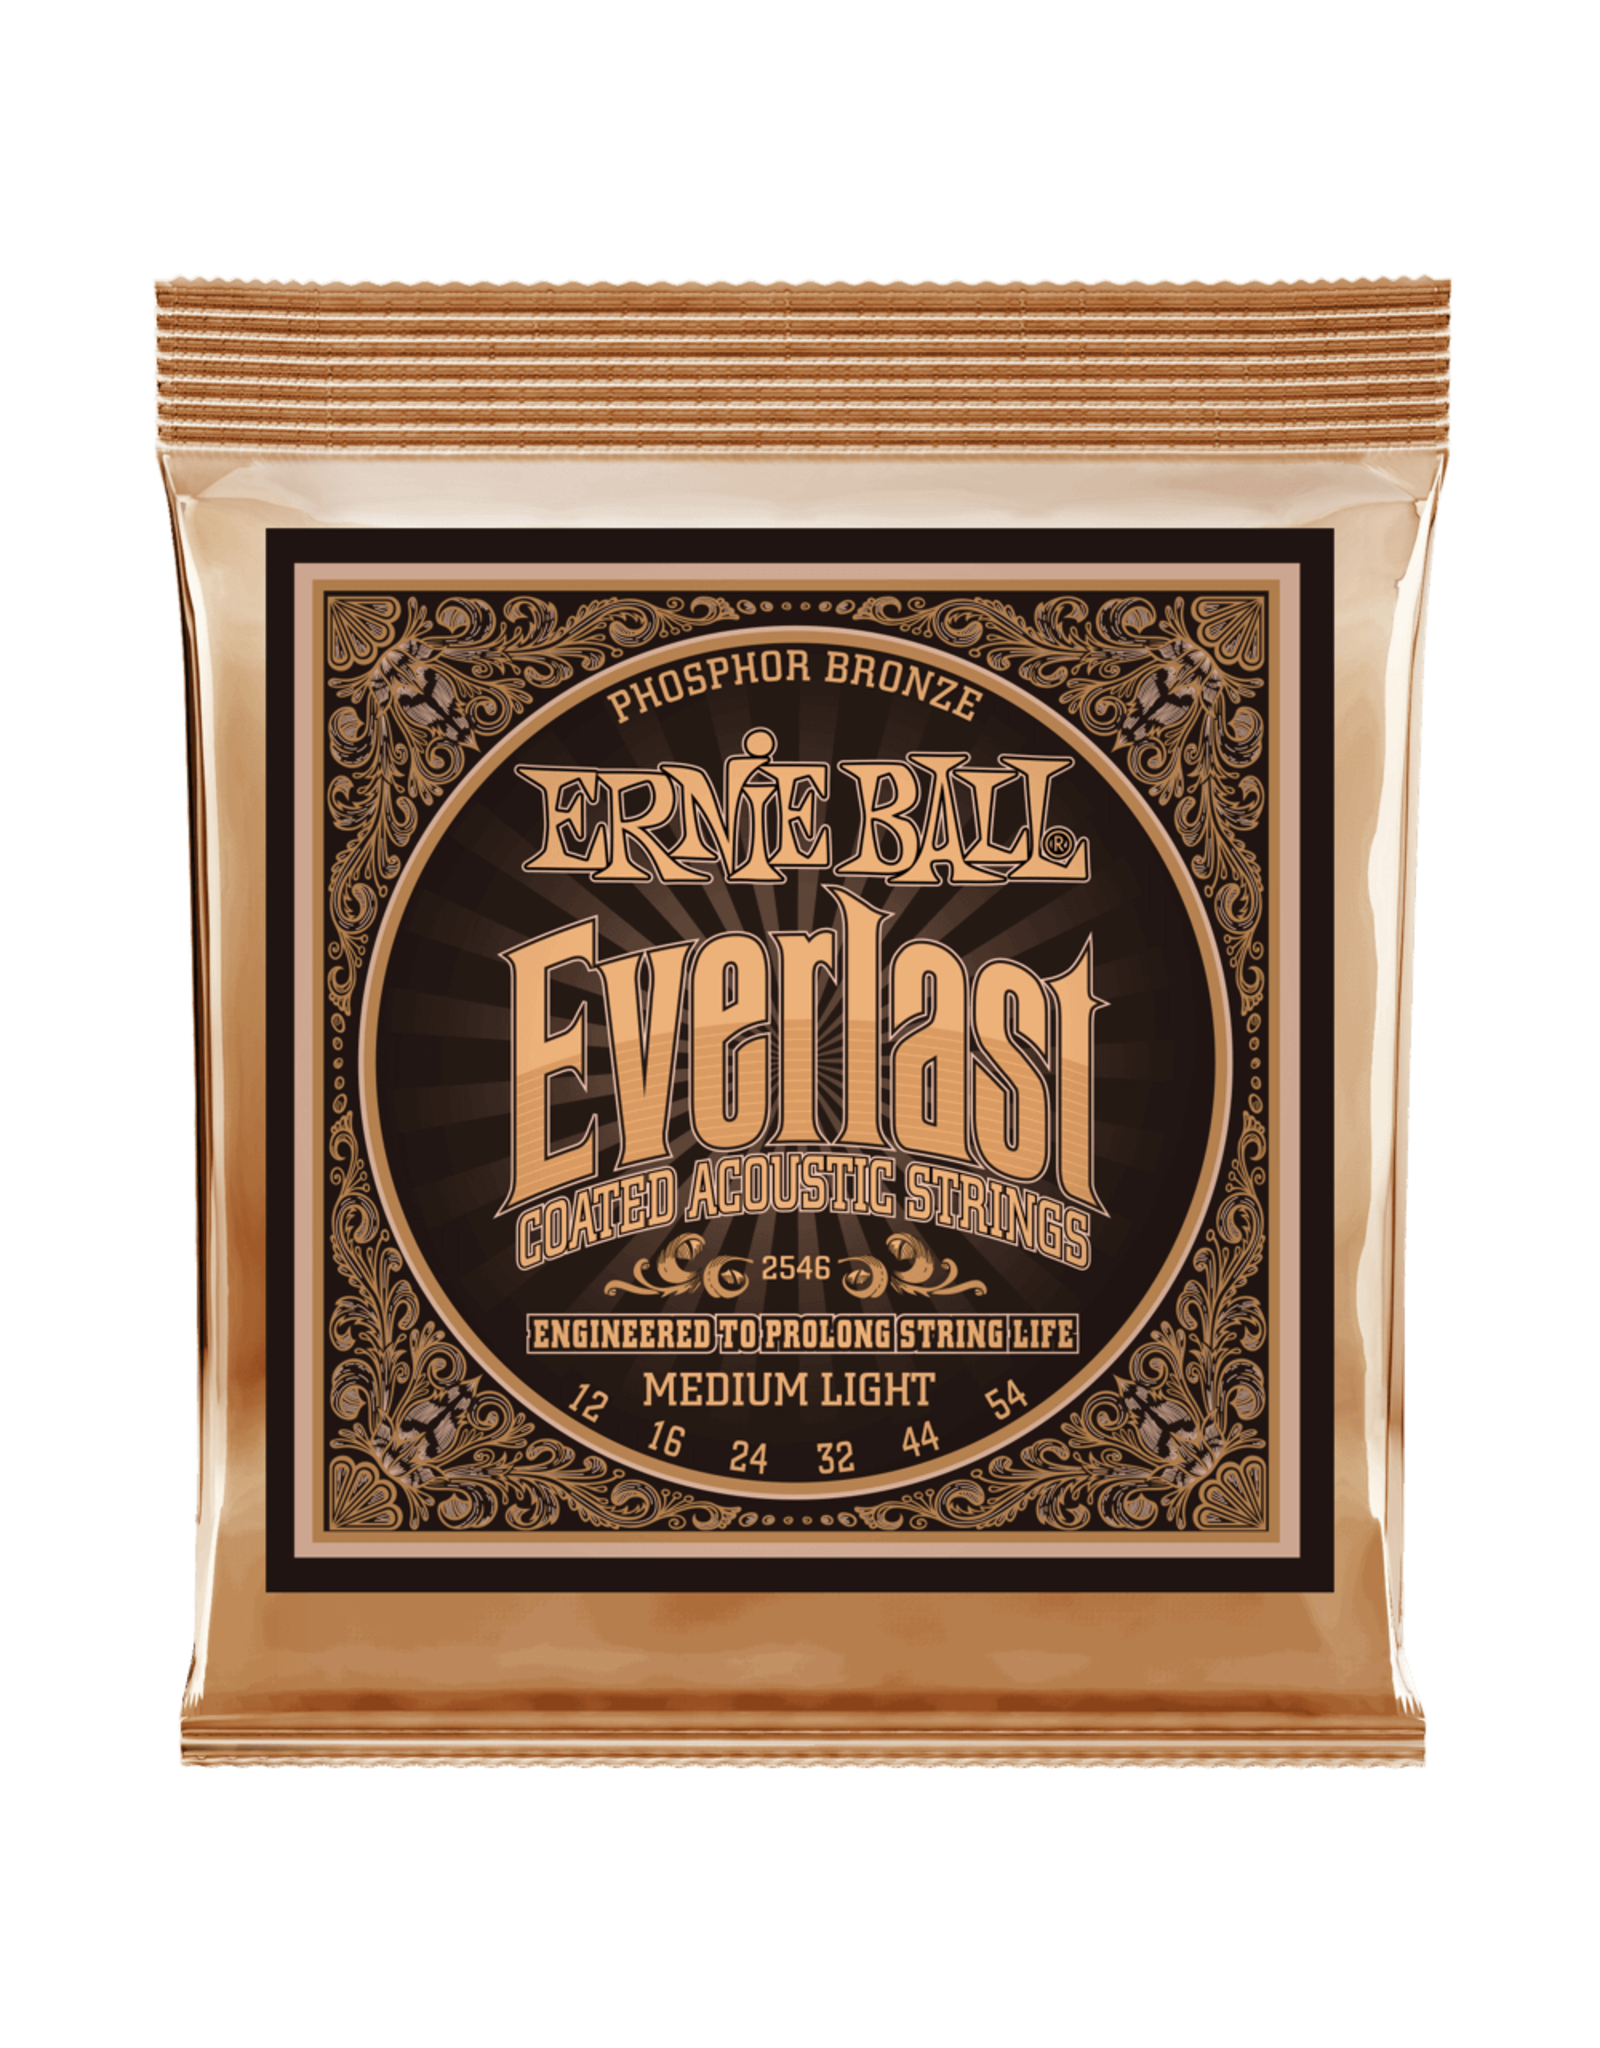 Ernie Ball Ernie Ball Everlast Medium Light Coated Phosphor Bronze Acoustic Guitar Strings 12-54